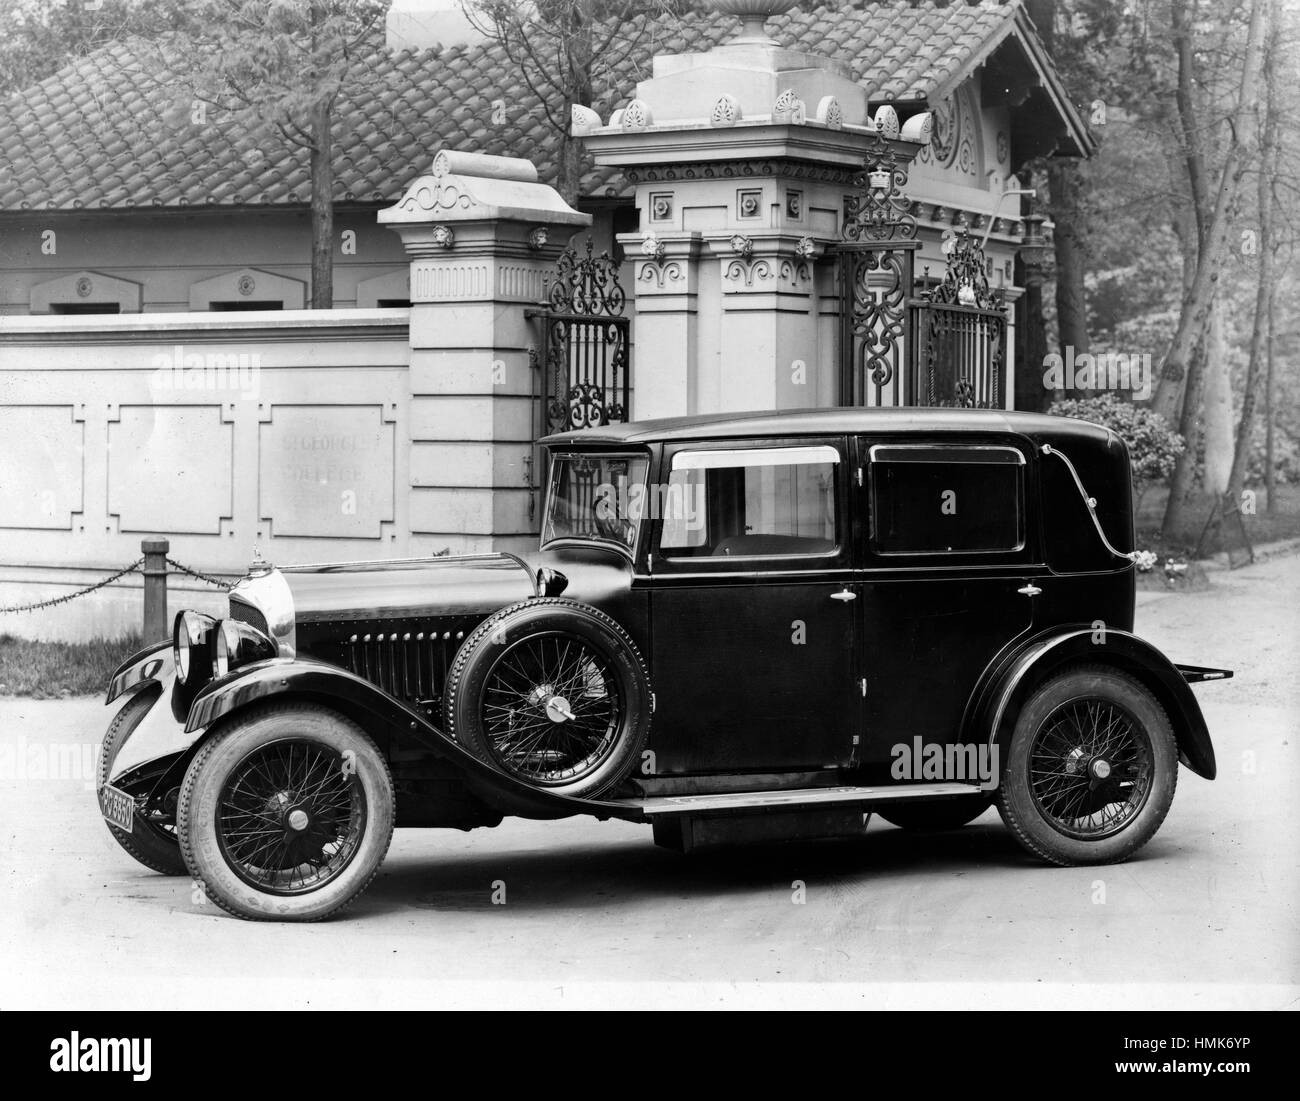 1930 Bentley 4.5 litre Weymann body Stock Photo